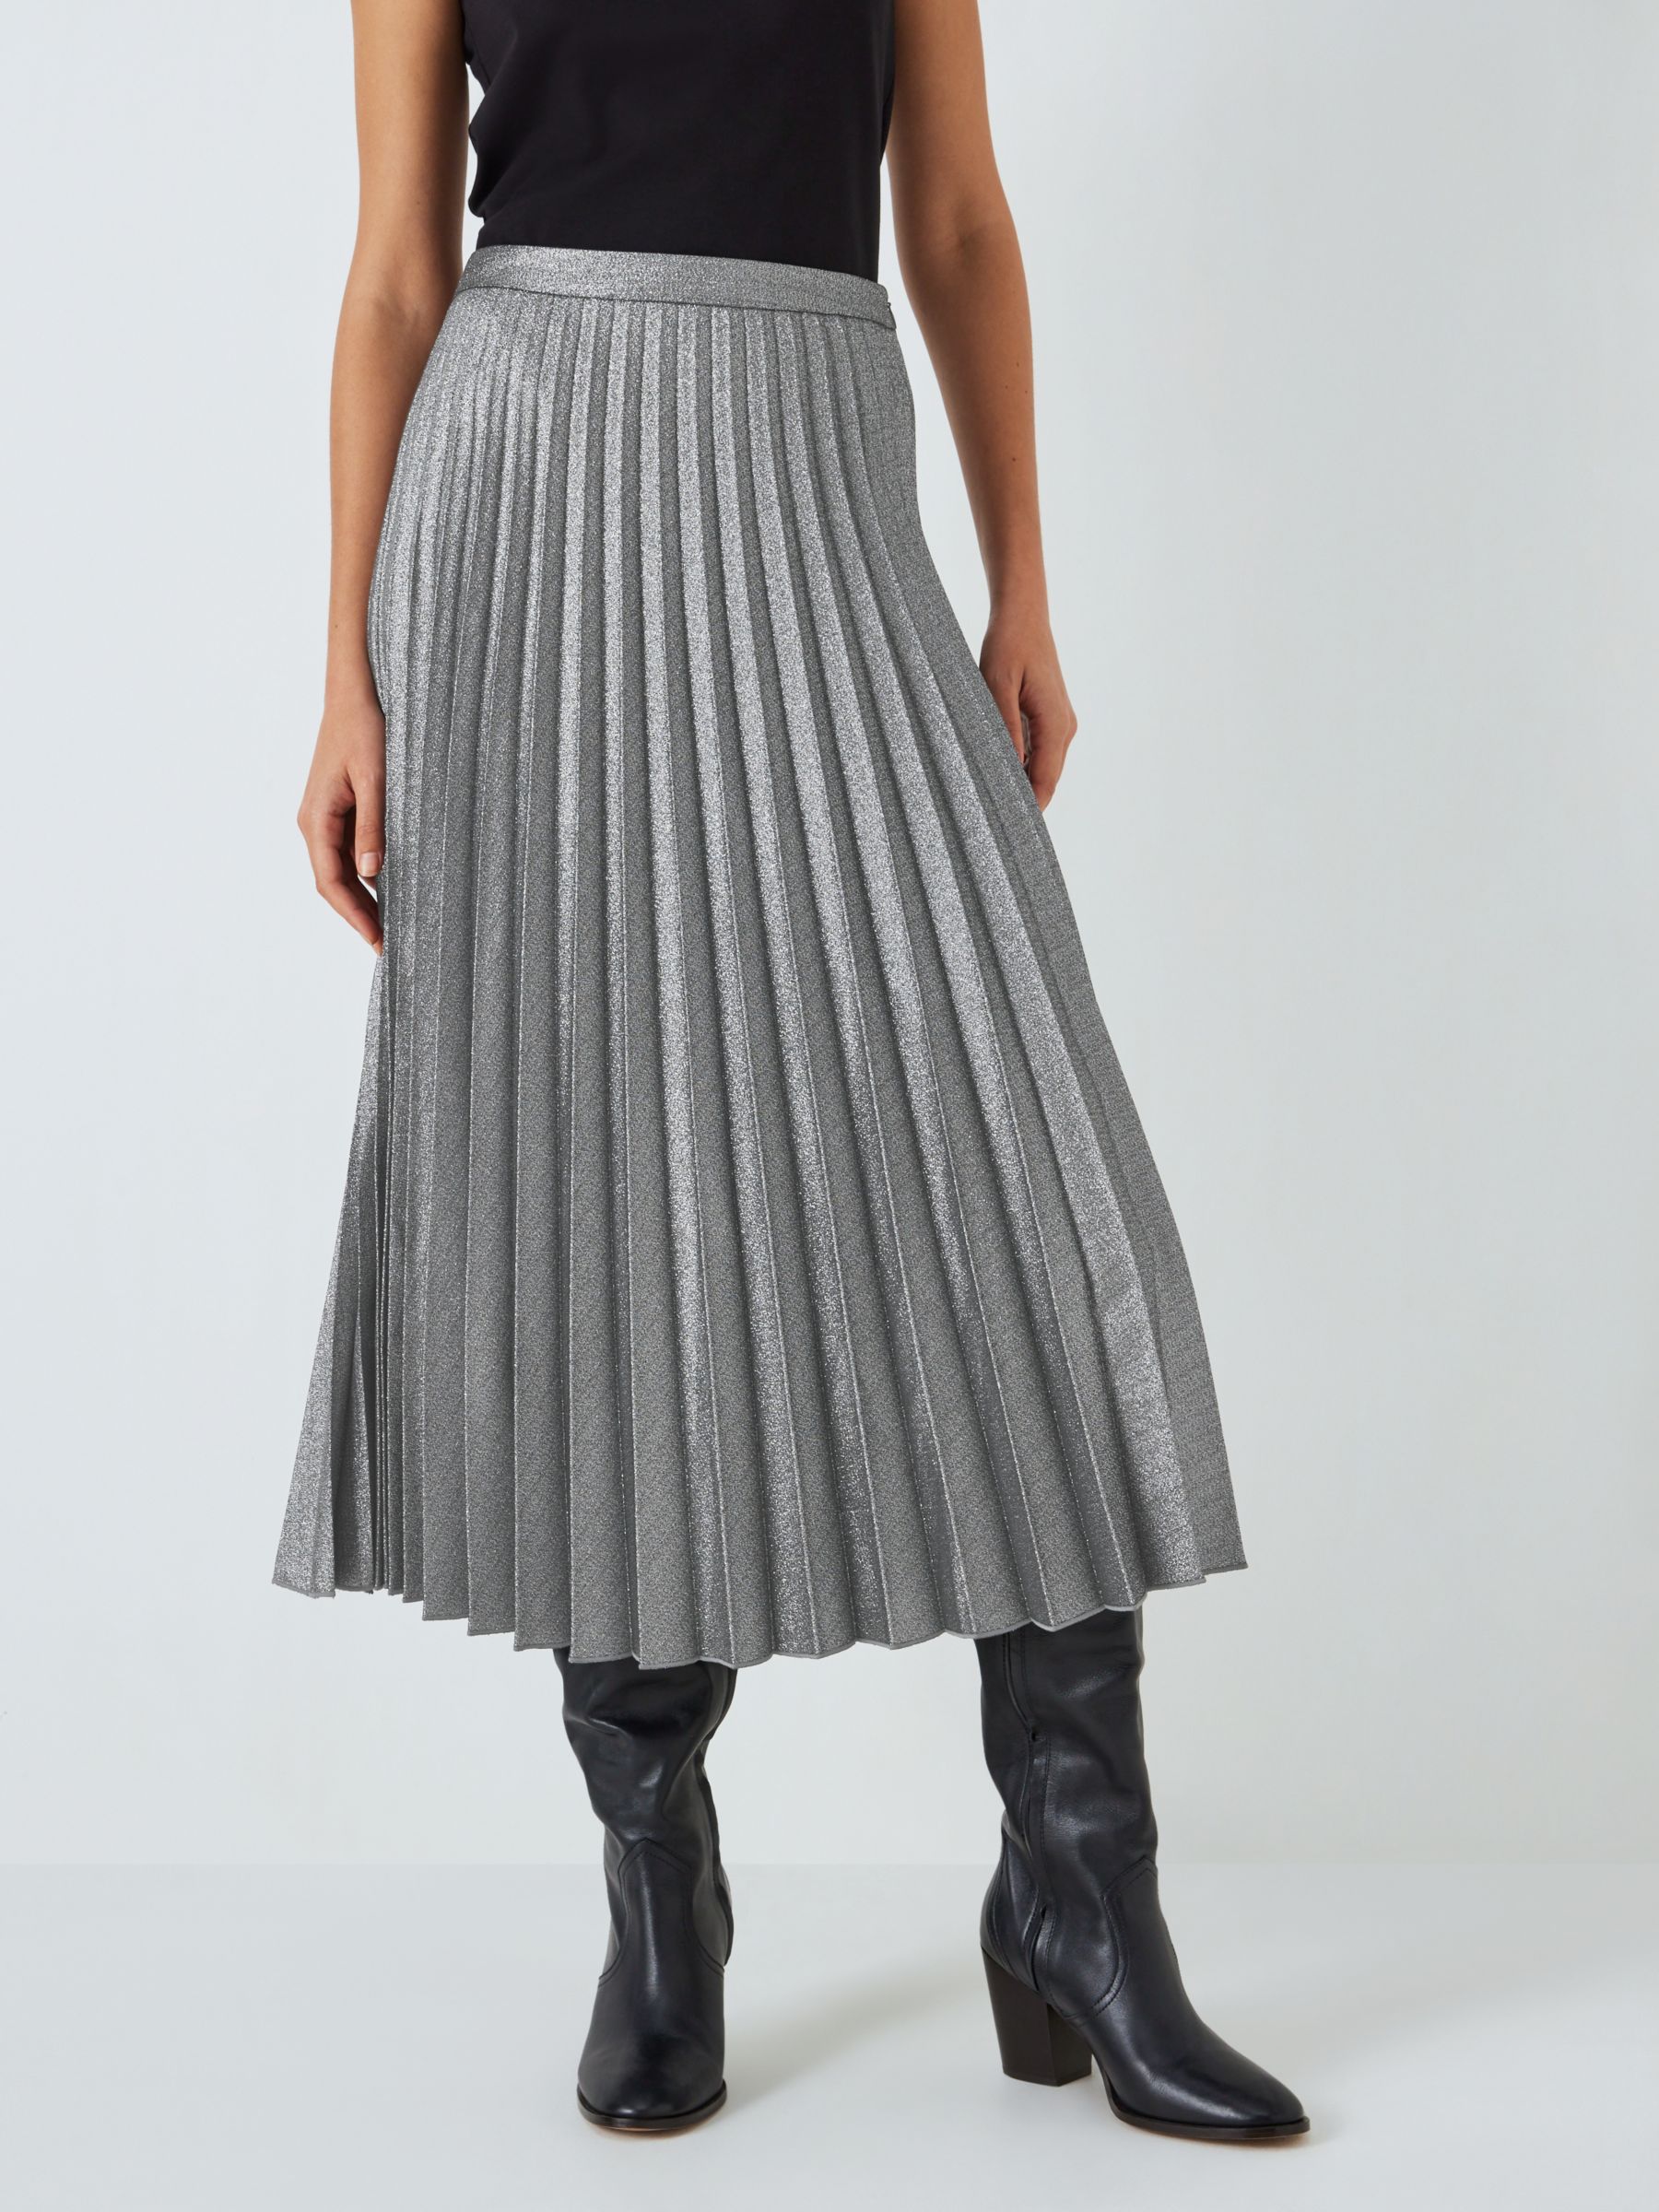 John Lewis Metallic Pleated Skirt, Black/Silver at John Lewis & Partners